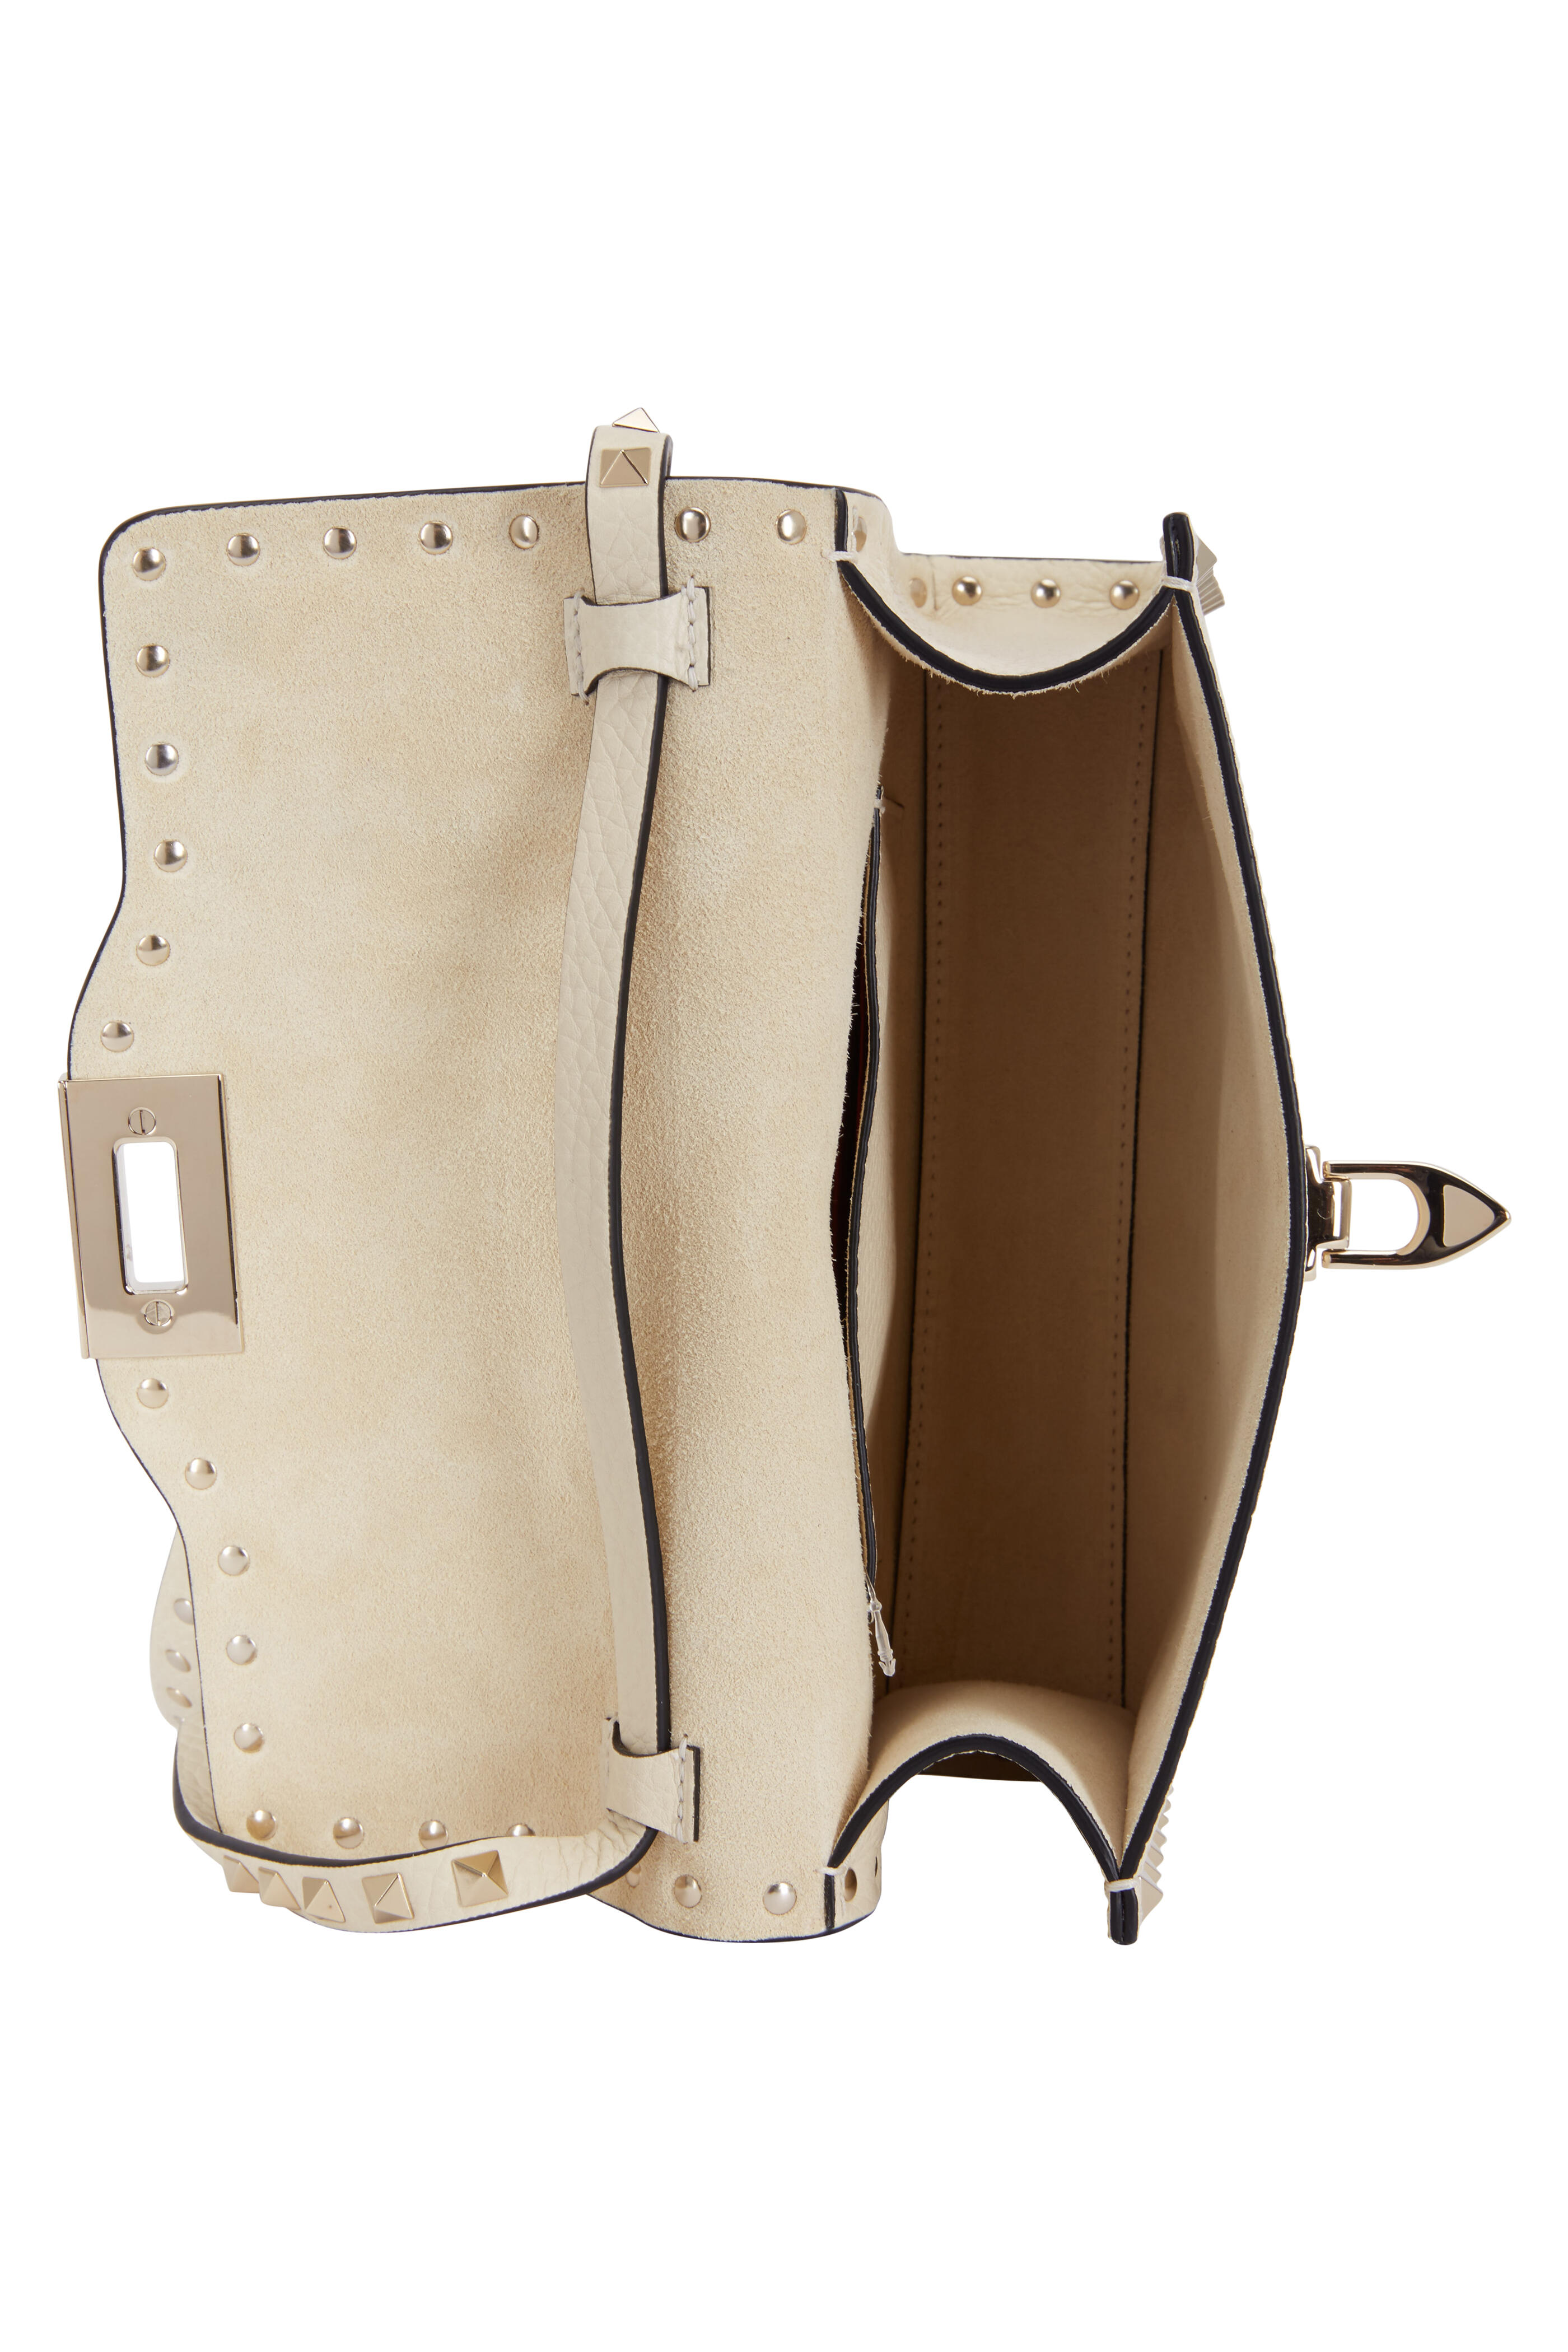 Valentino Garavani Rockstud Leather Clutch Bag